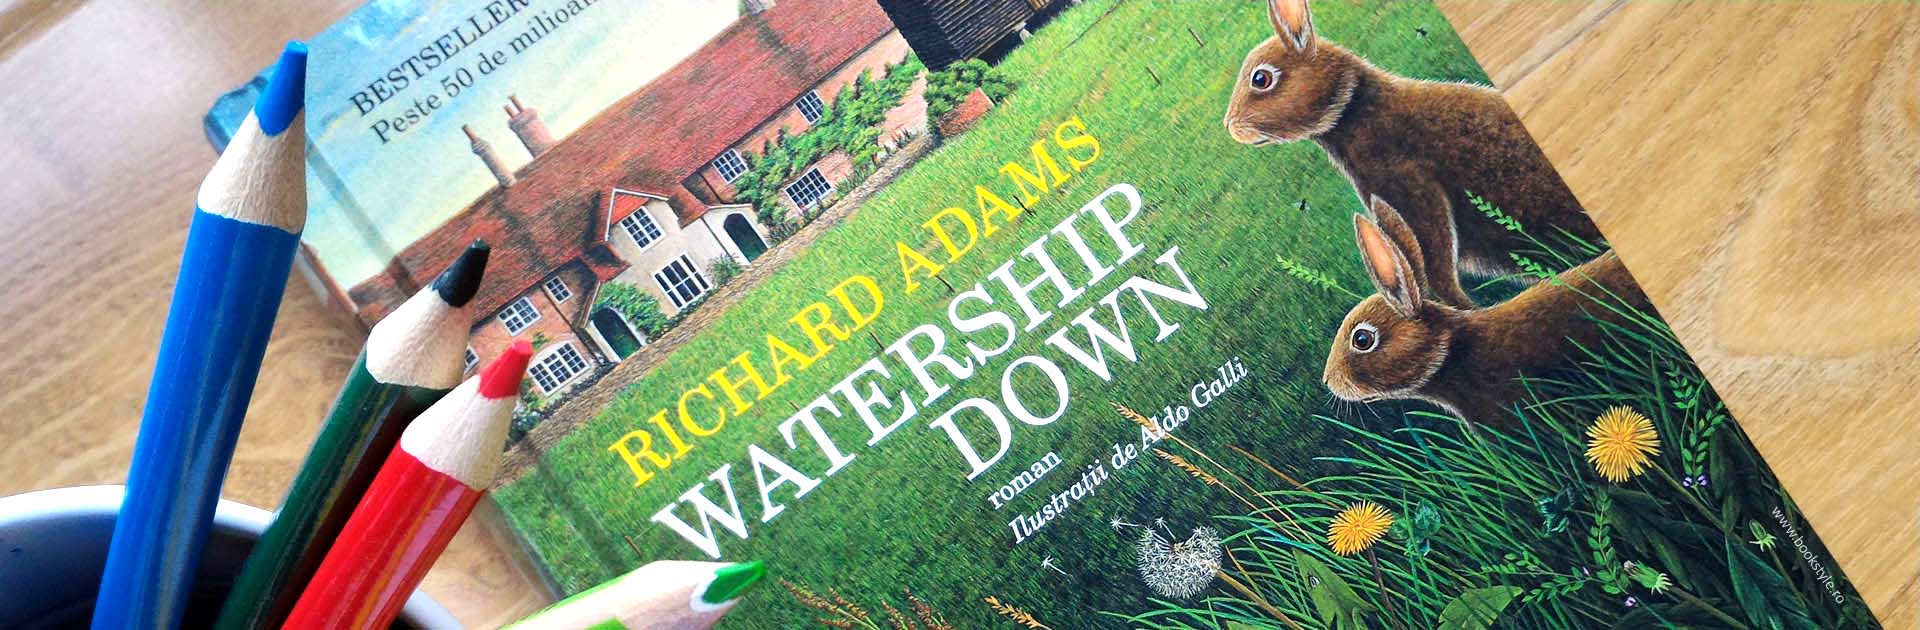 Watership Down - Richard Adams, Editura Humanitas ISBN: 978-973-50-3862-5